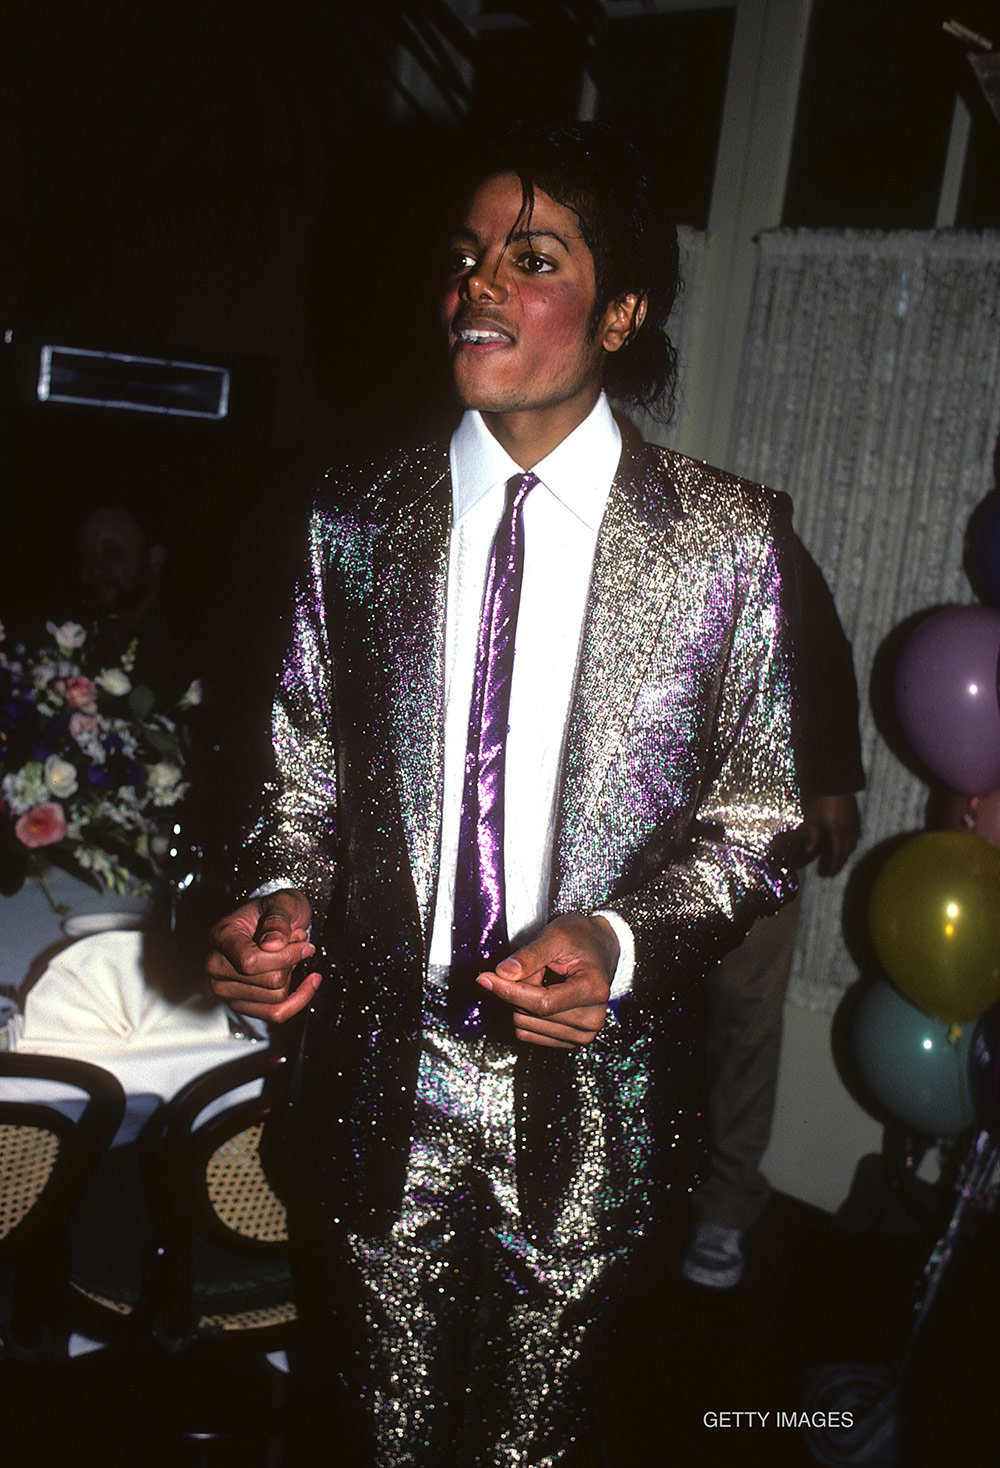 Michael Jackson in 1980s.